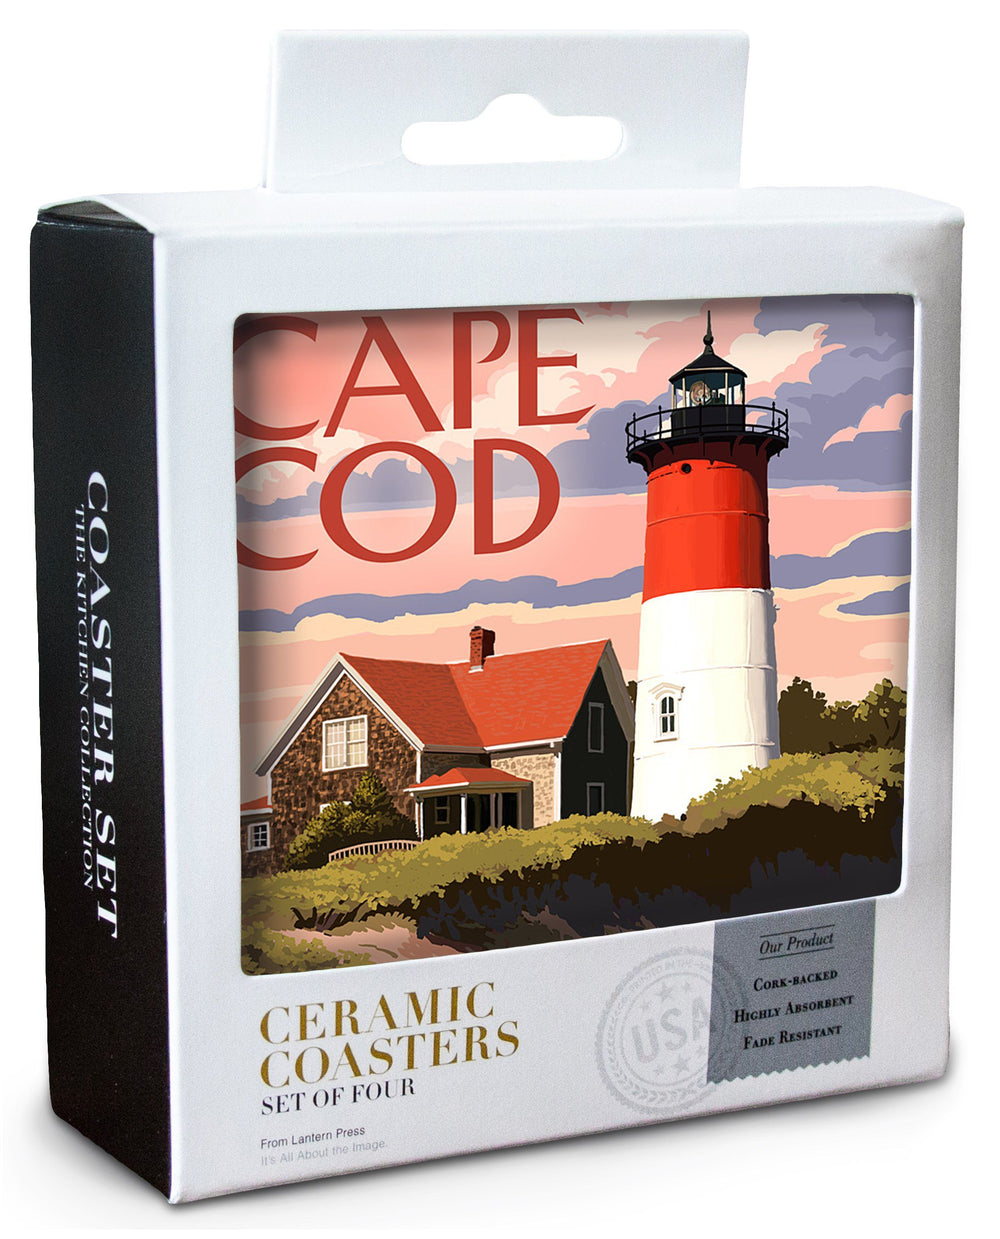 Cape Cod National Seashore, Massachusetts, Nauset Light & Sunset, Lantern Press Artwork, Coaster Set Coasters Lantern Press 